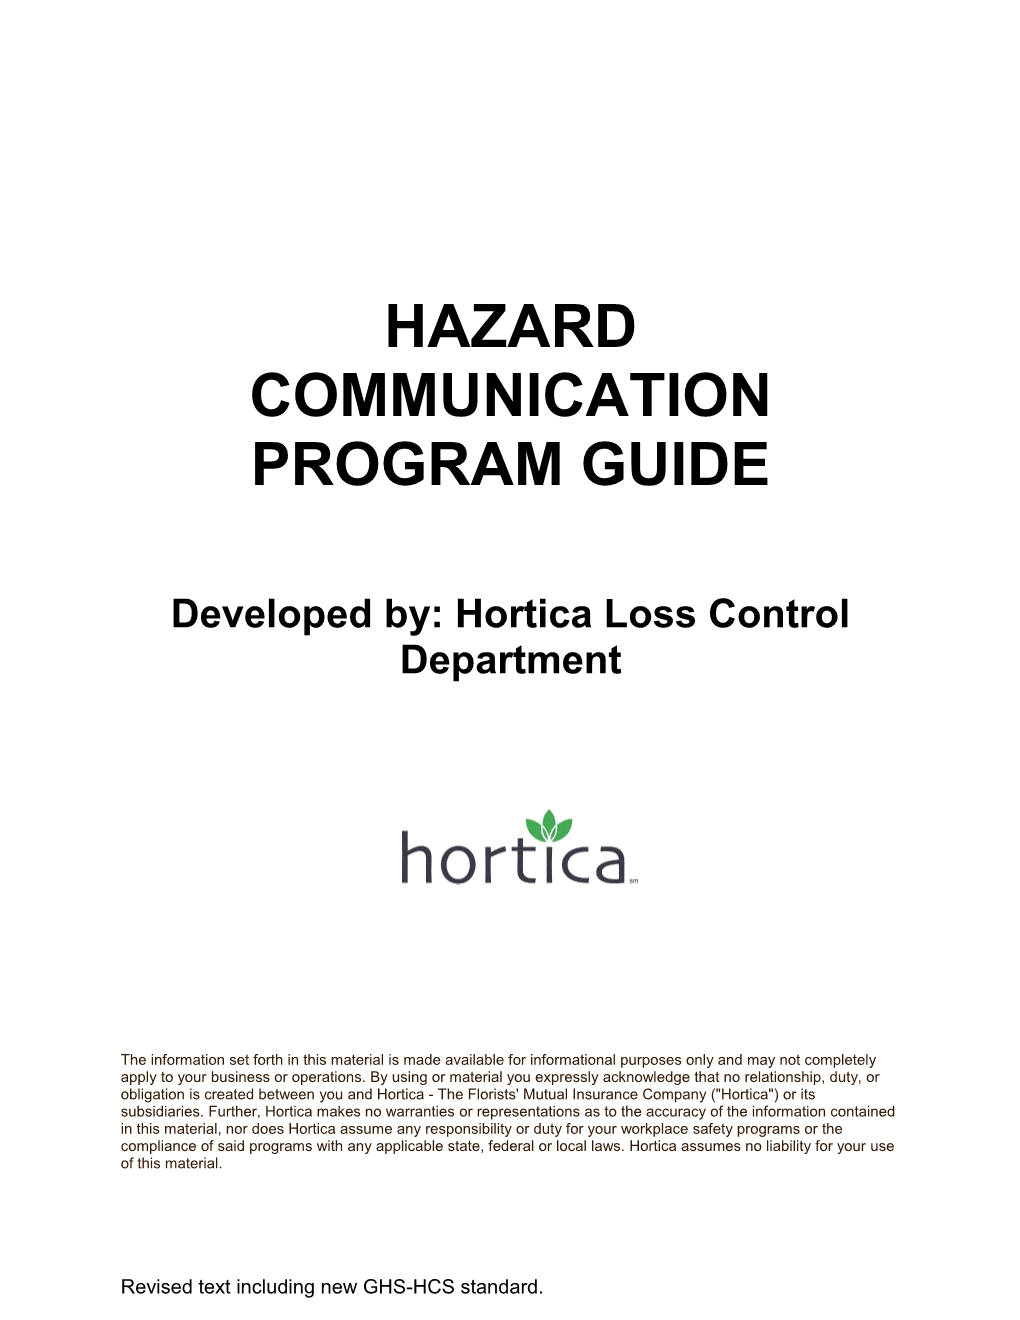 Hazard Communication Program Guide